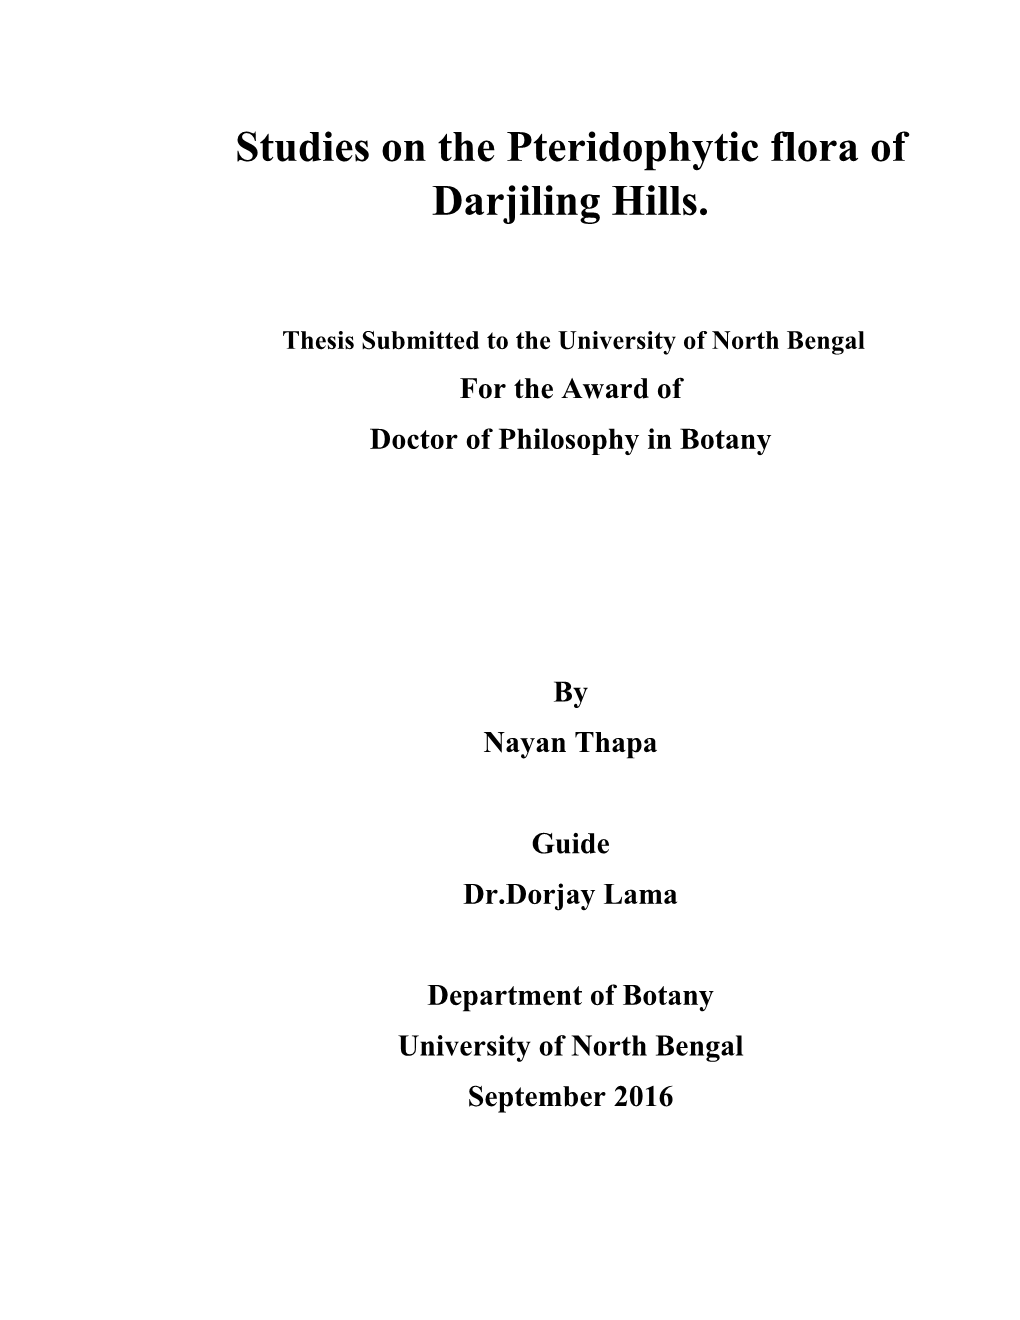 Studies on the Pteridophytic Flora of Darjiling Hills